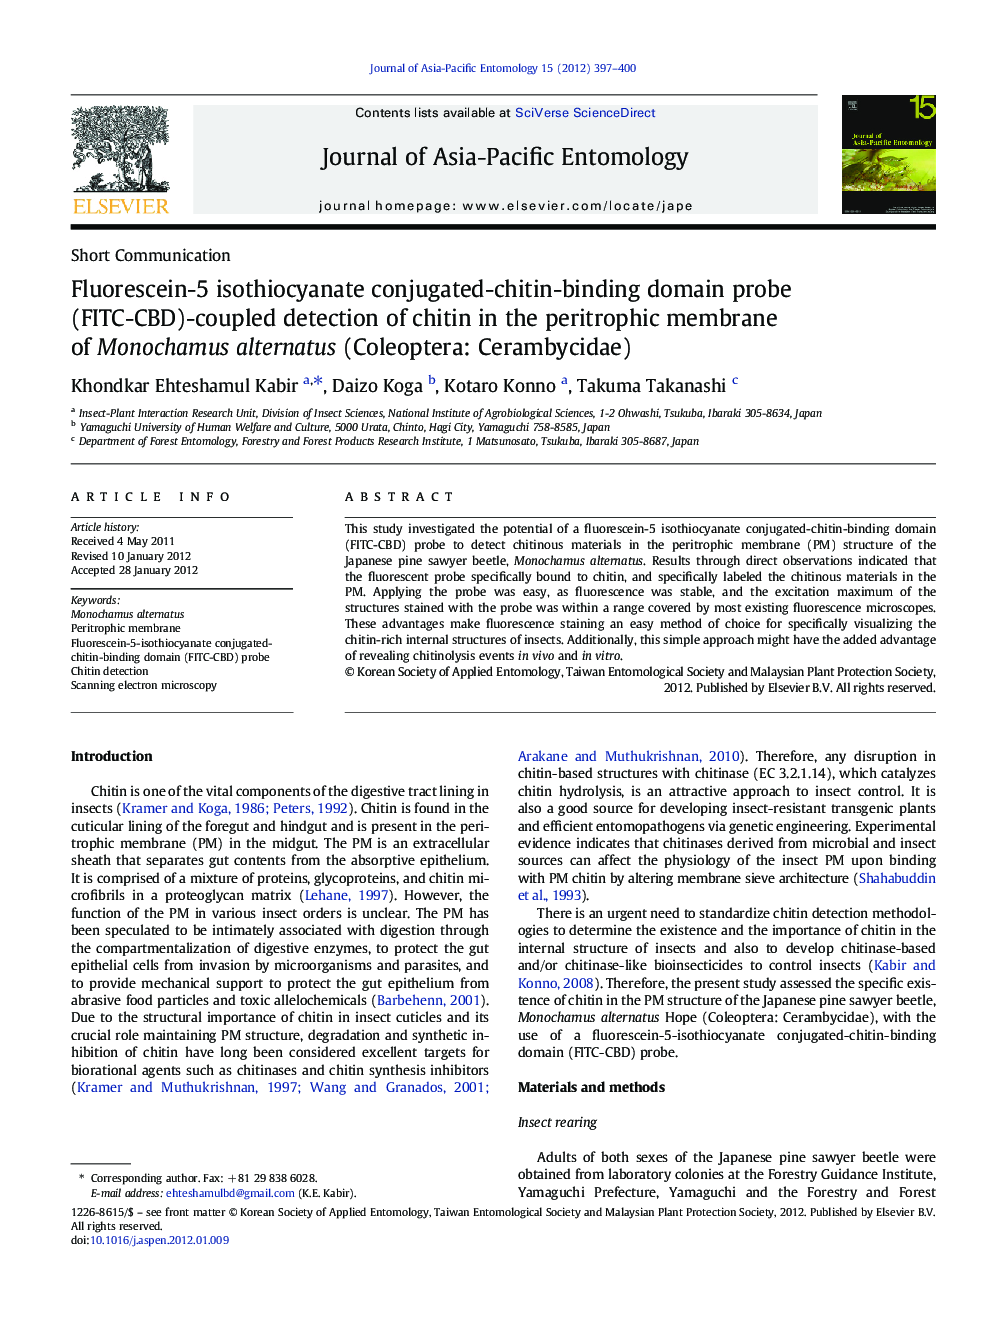 Fluorescein-5 isothiocyanate conjugated-chitin-binding domain probe (FITC-CBD)-coupled detection of chitin in the peritrophic membrane of Monochamus alternatus (Coleoptera: Cerambycidae)